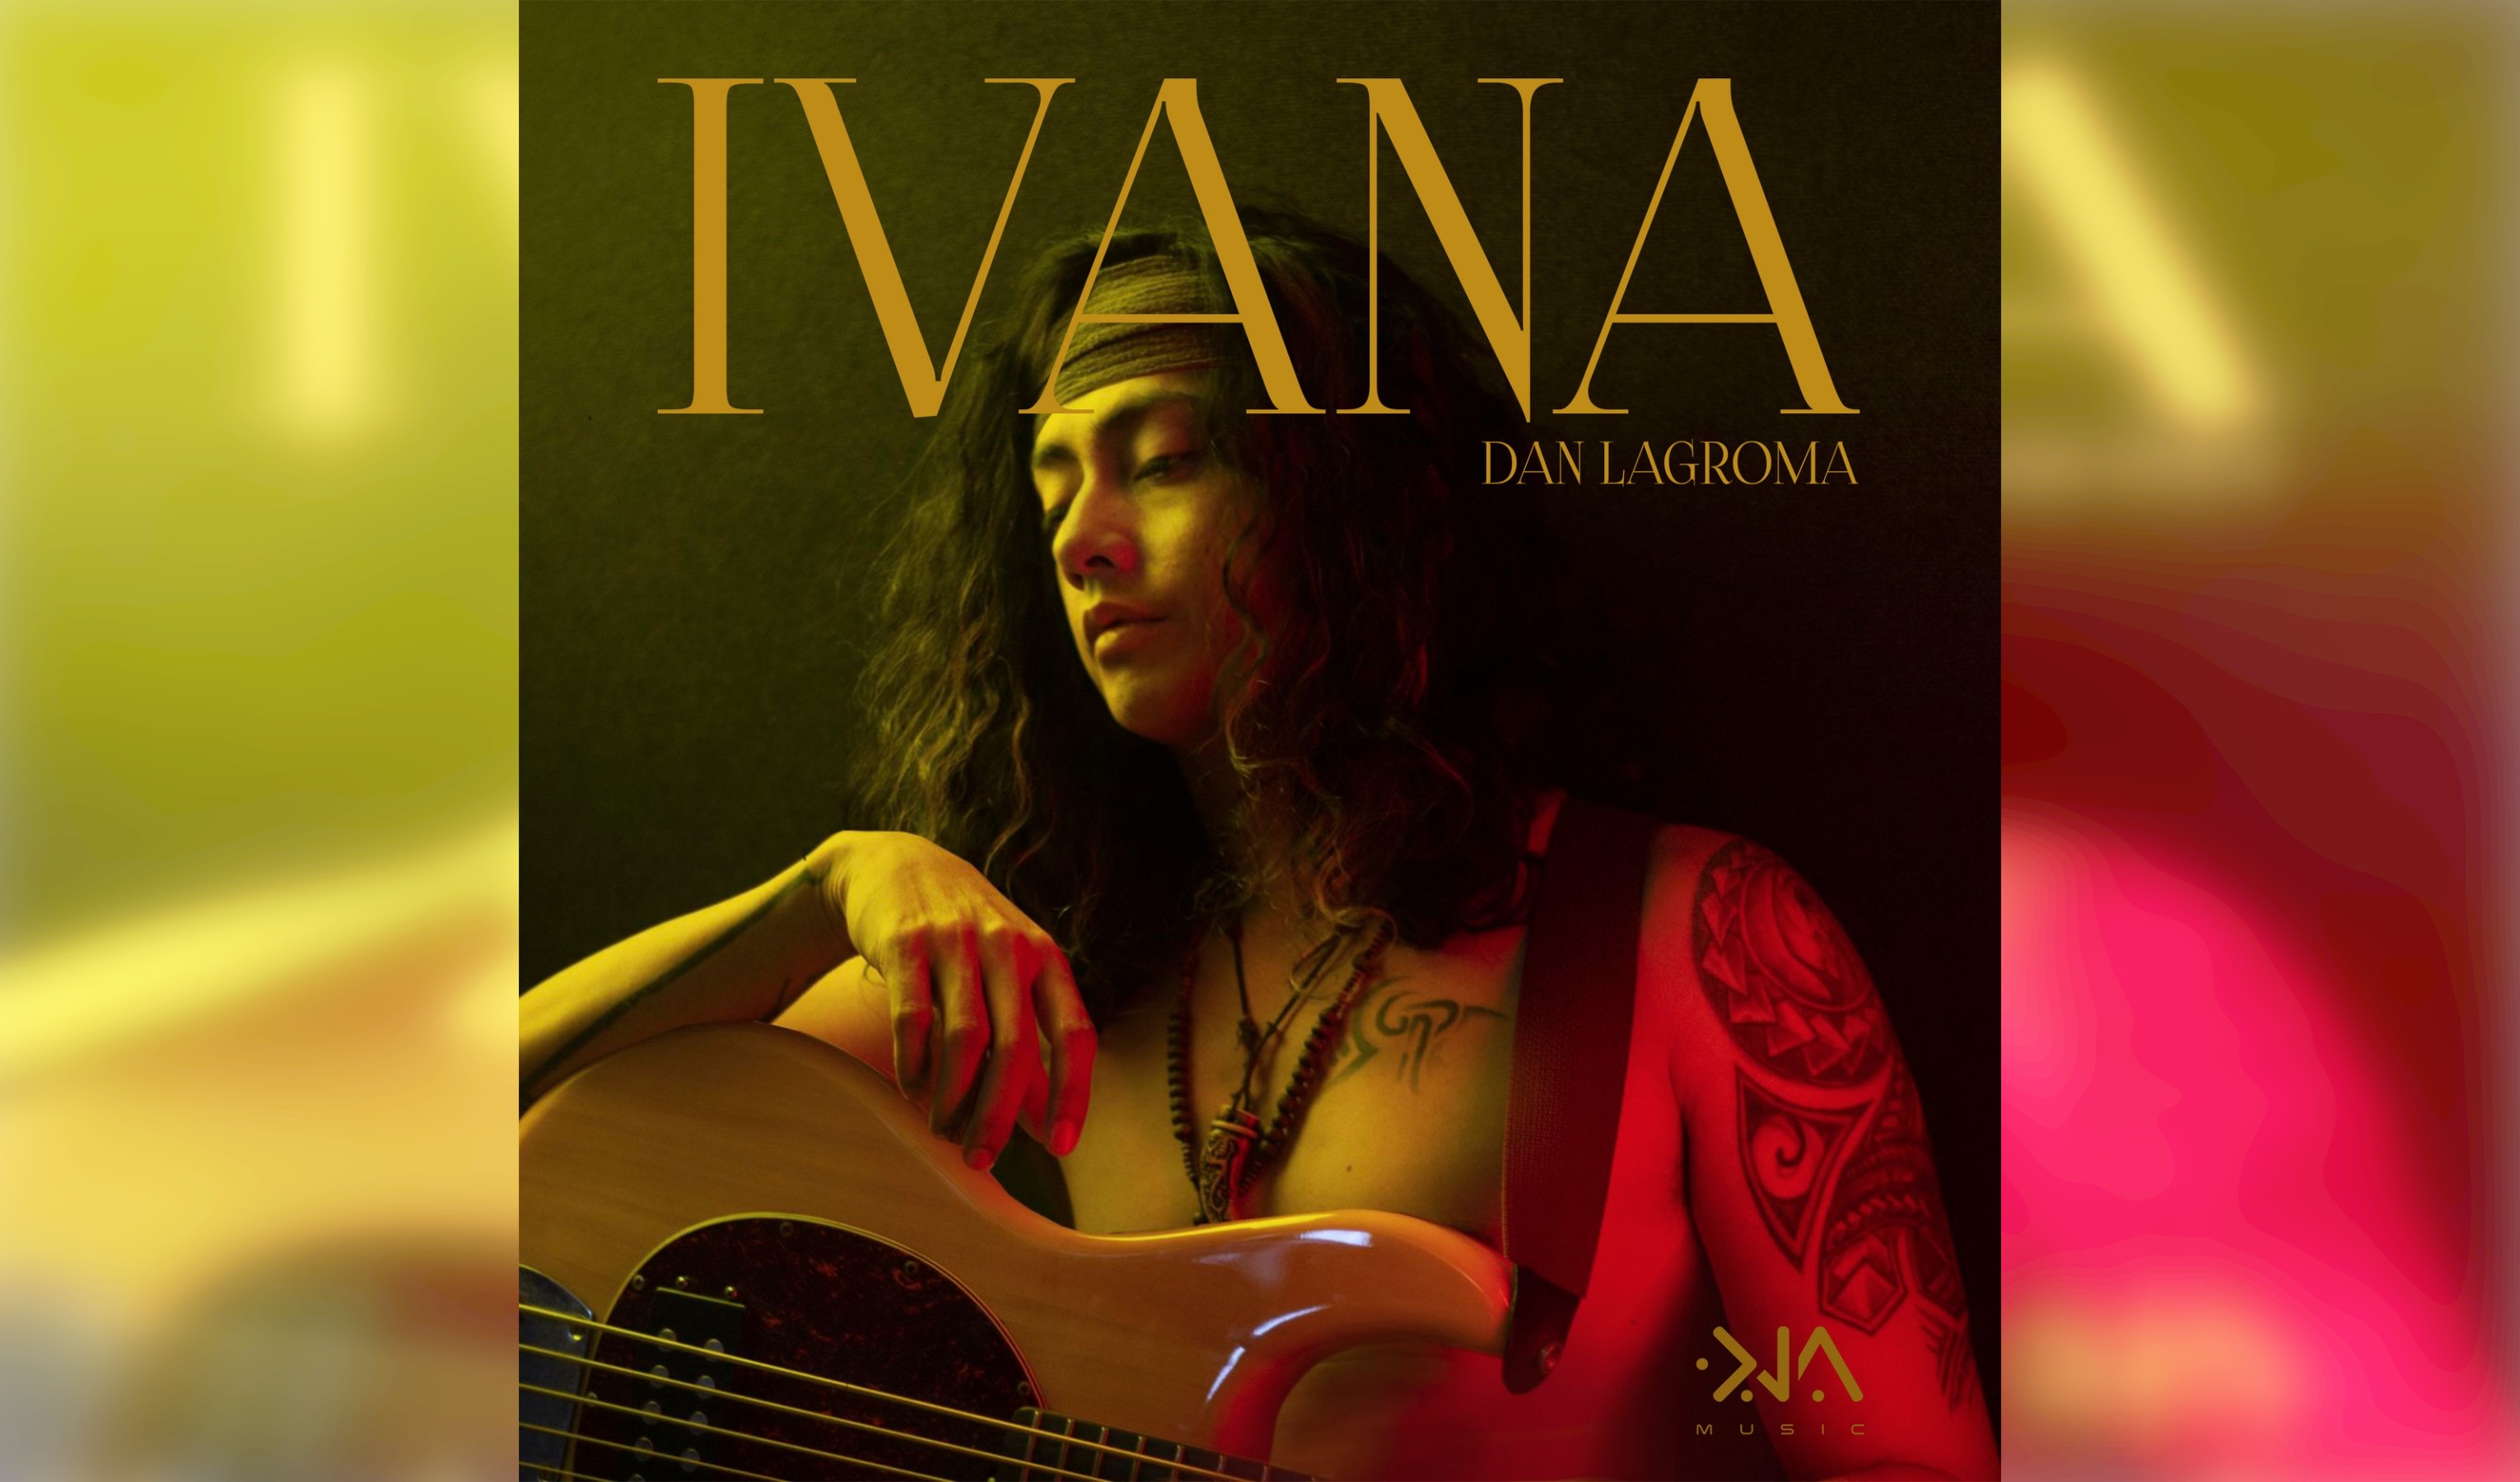 Dan Lagroma drops new song "Ivana"